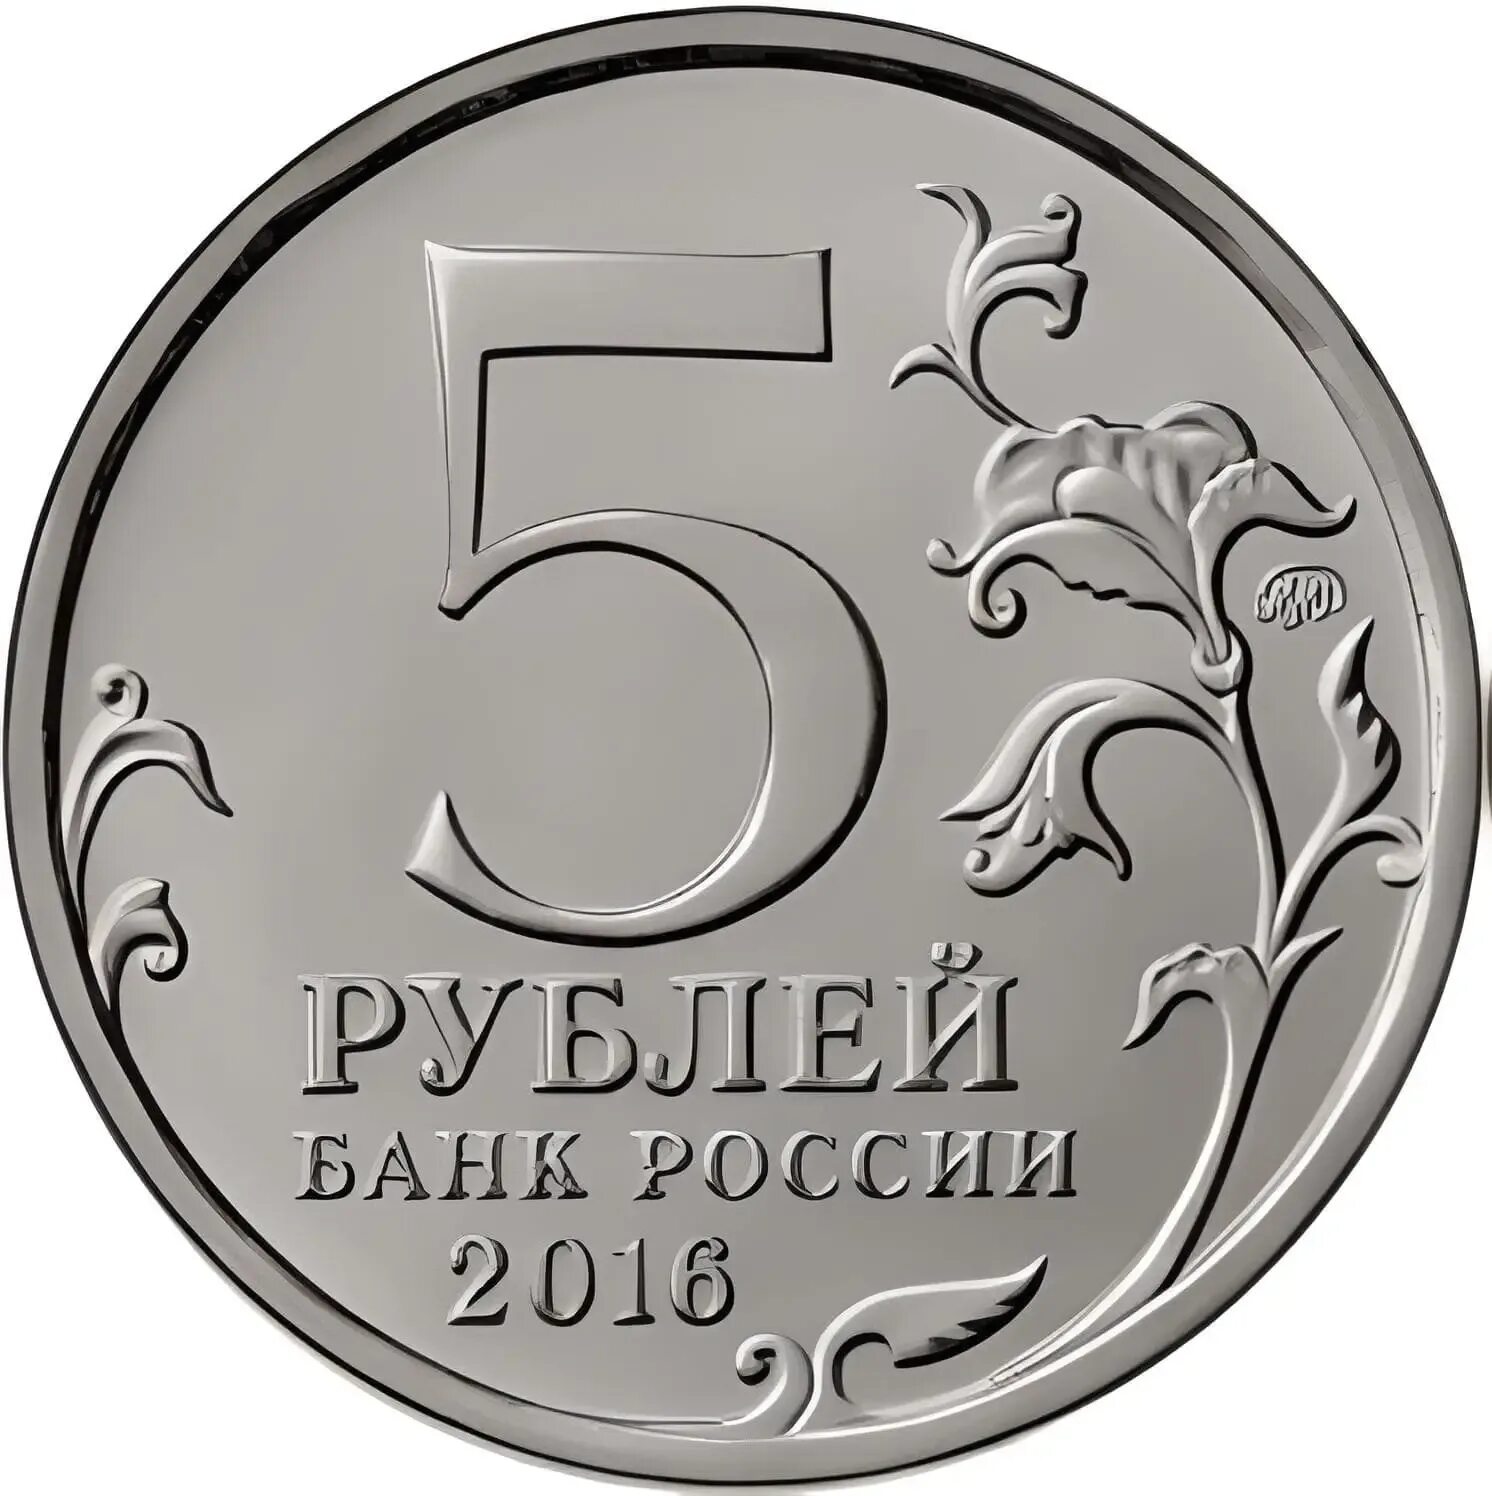 Монета 5 рублей 2016. Монета 5 рублей. Изображение 5 рублей. Монета 2 рубля на прозрачном фоне. Монета 5 руб для фотошопа.